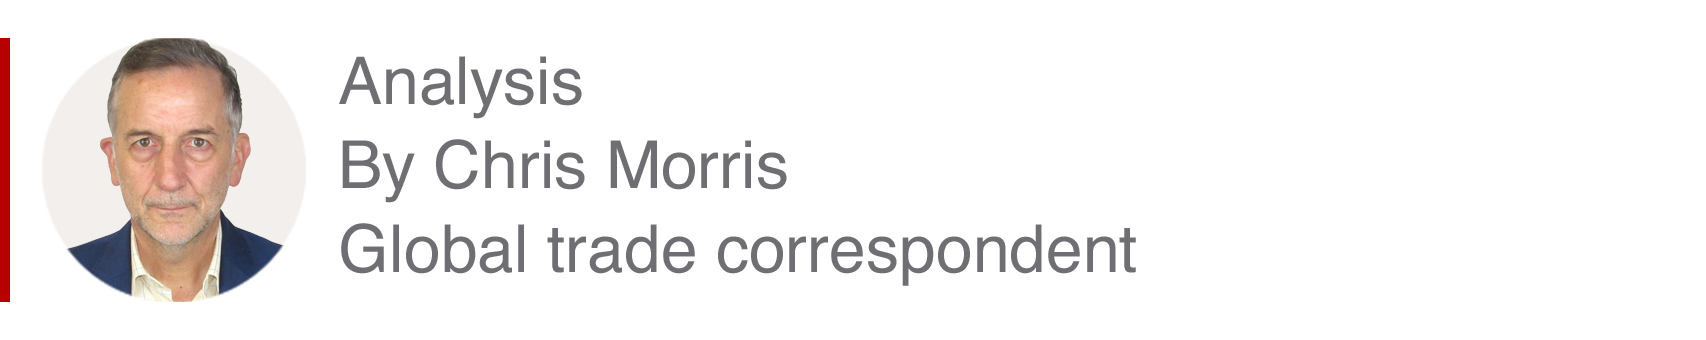 Analysis box by Chris Morris, Global trade correspondent